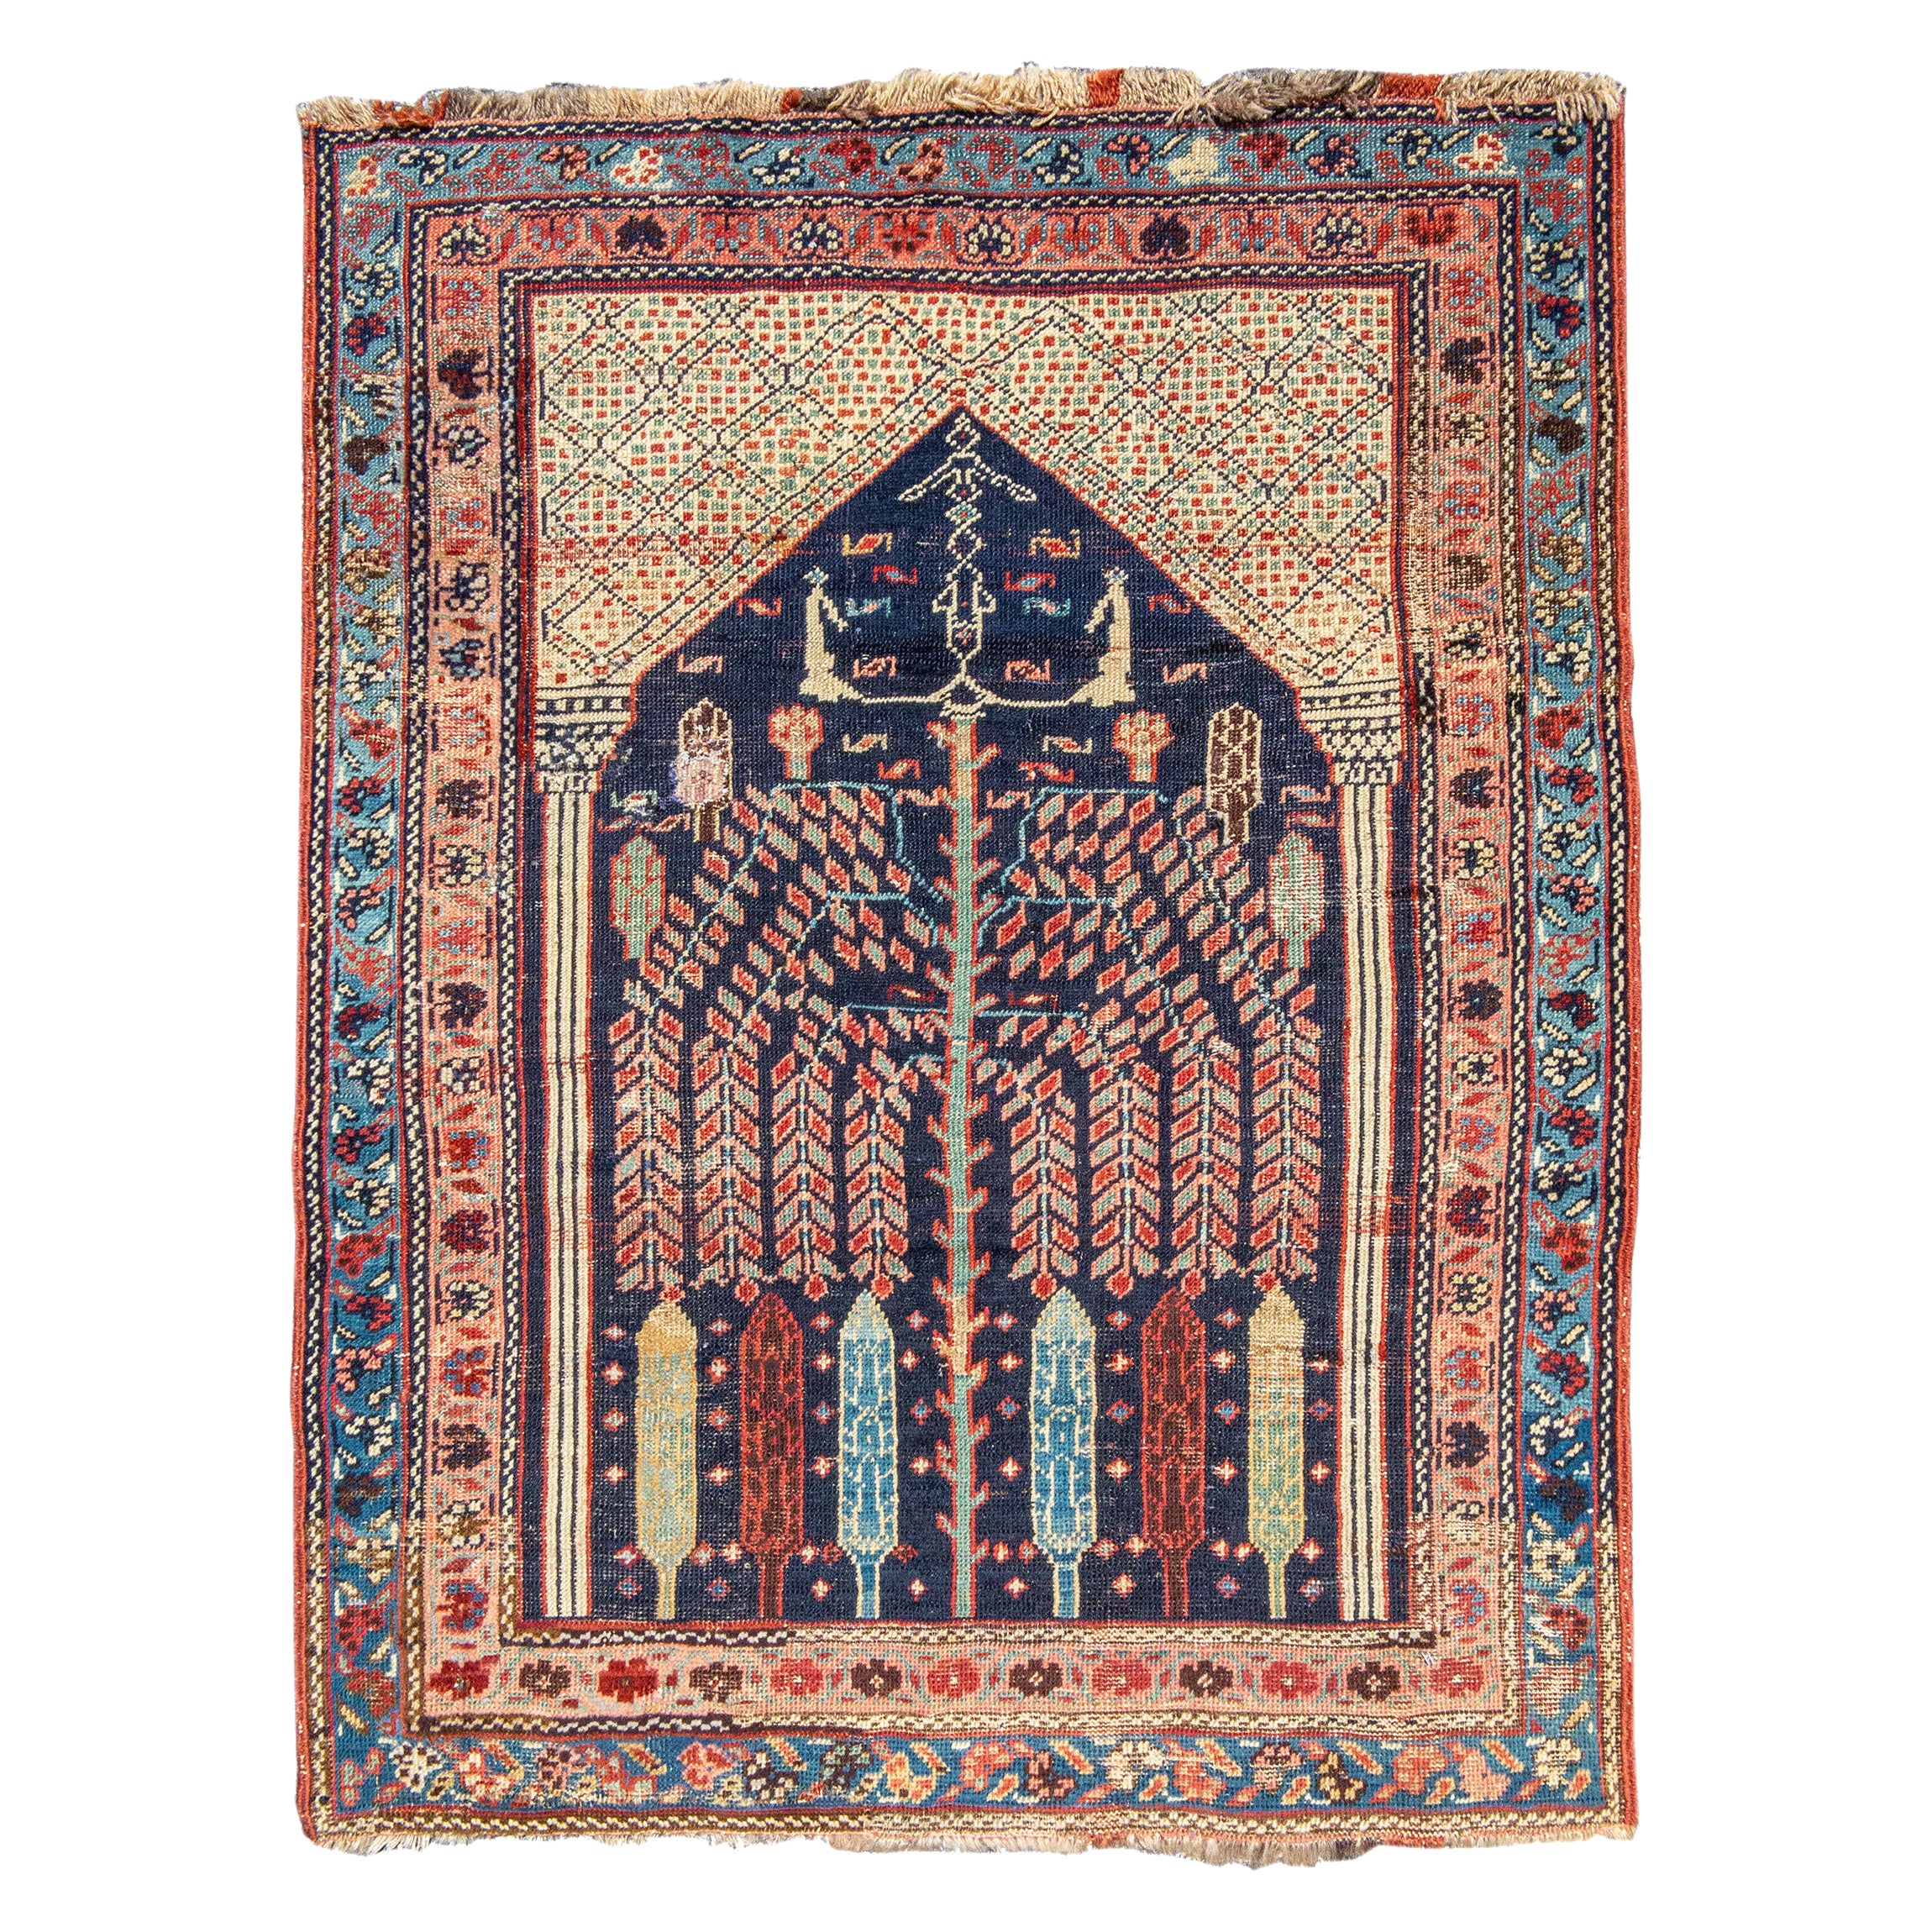 Antique Persian Bakshaish Prayer Rug, Mid-19th Century